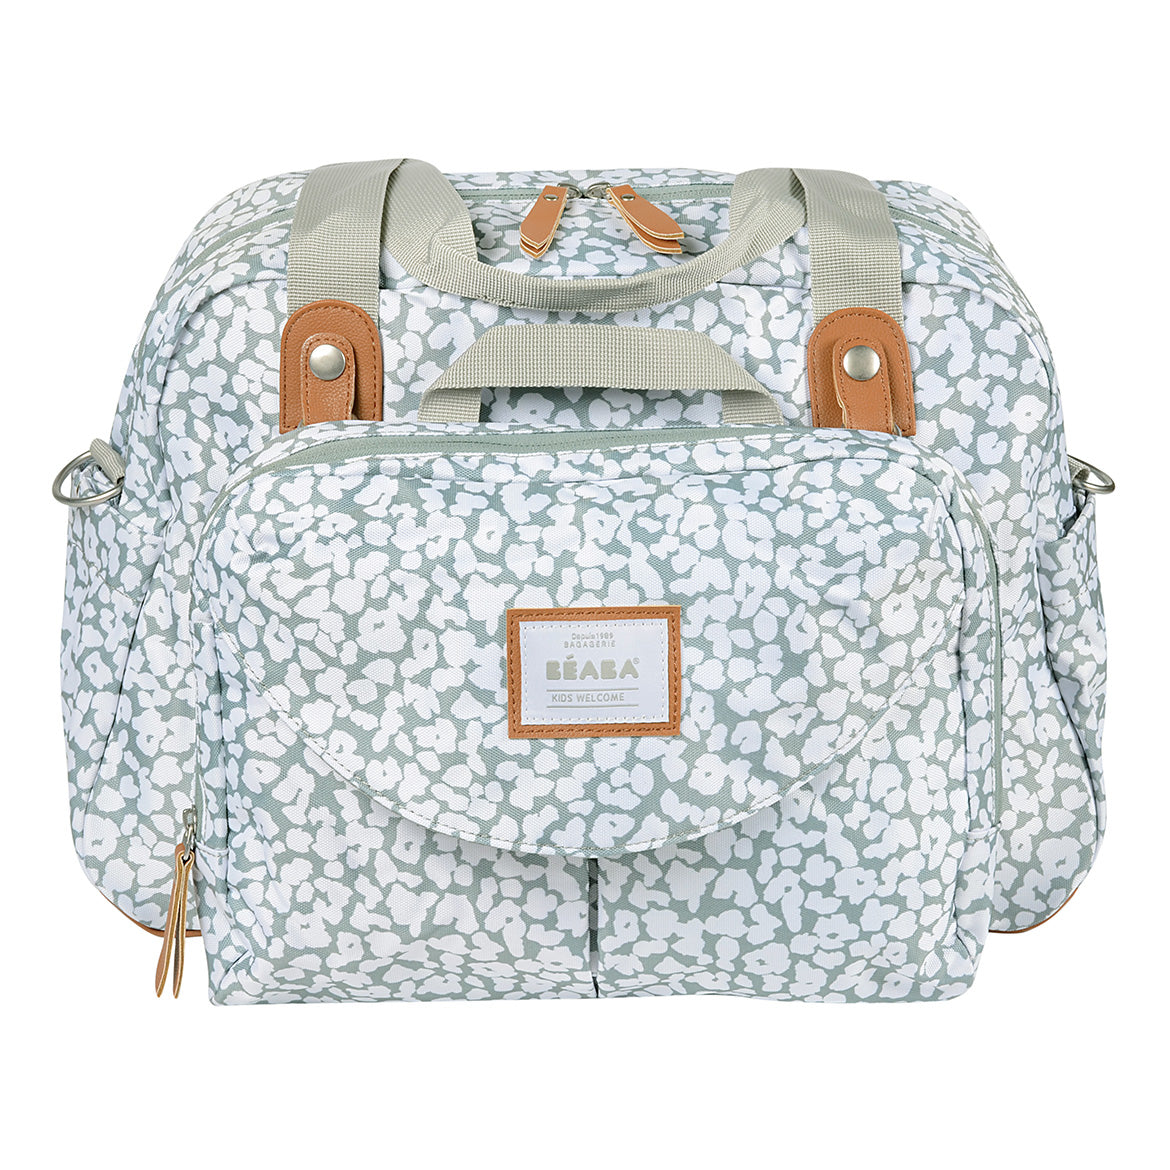 Beaba Geneva II Diaper Bag - Cherry Blossom